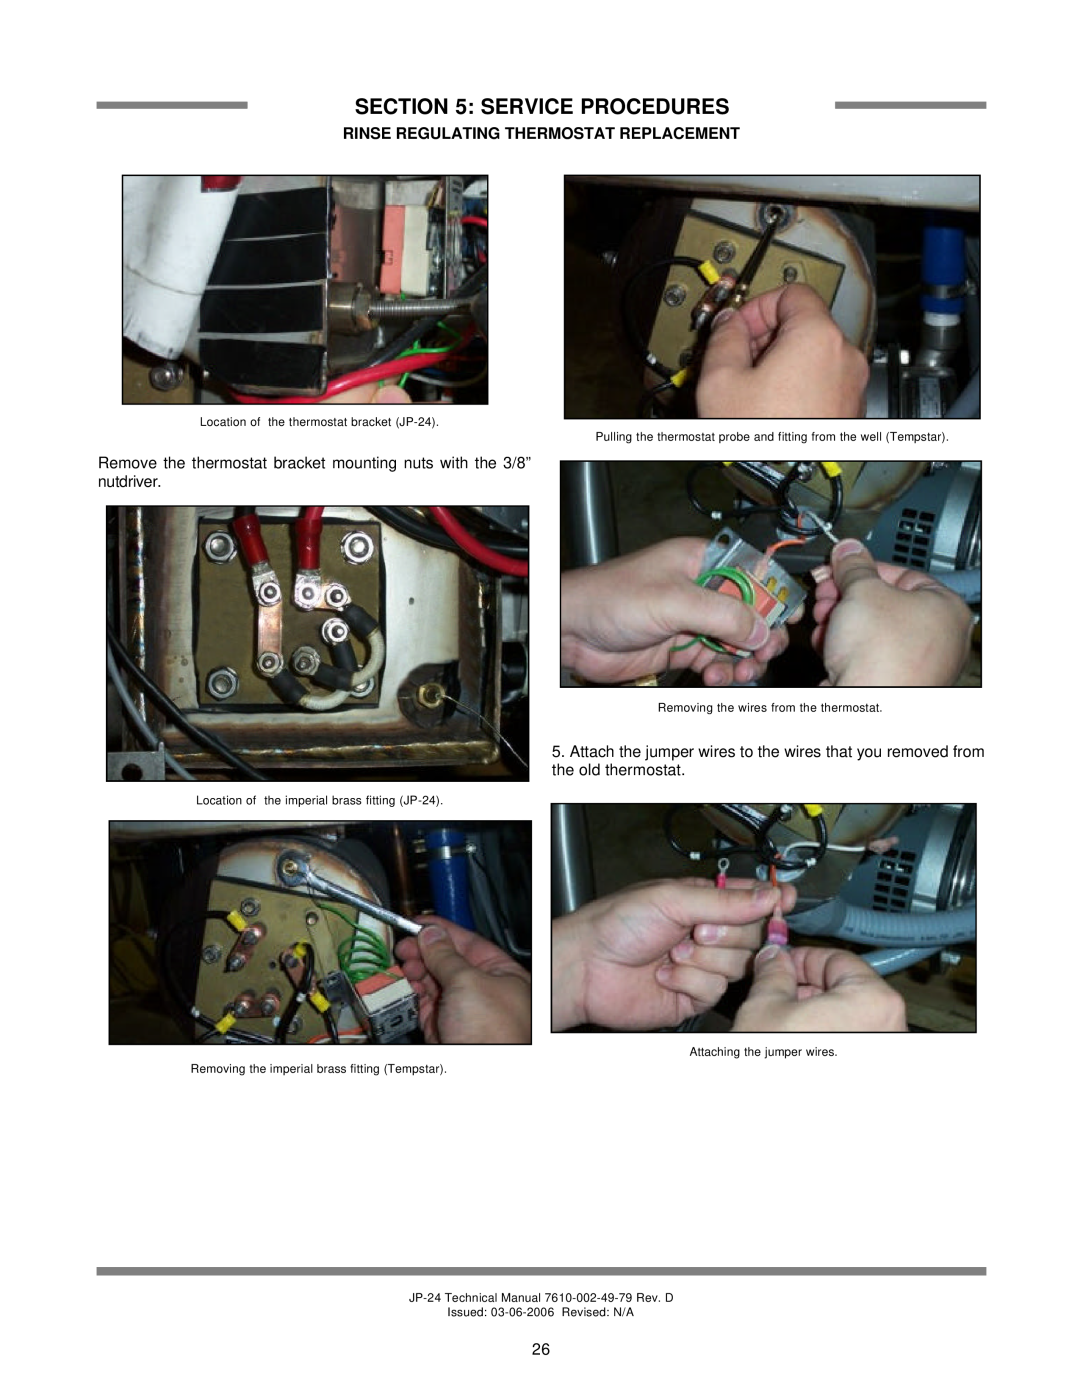 Jackson JP-24F, jp-24b, JP-24BF technical manual Service Procedures, Rinse Regulating Thermostat Replacement 